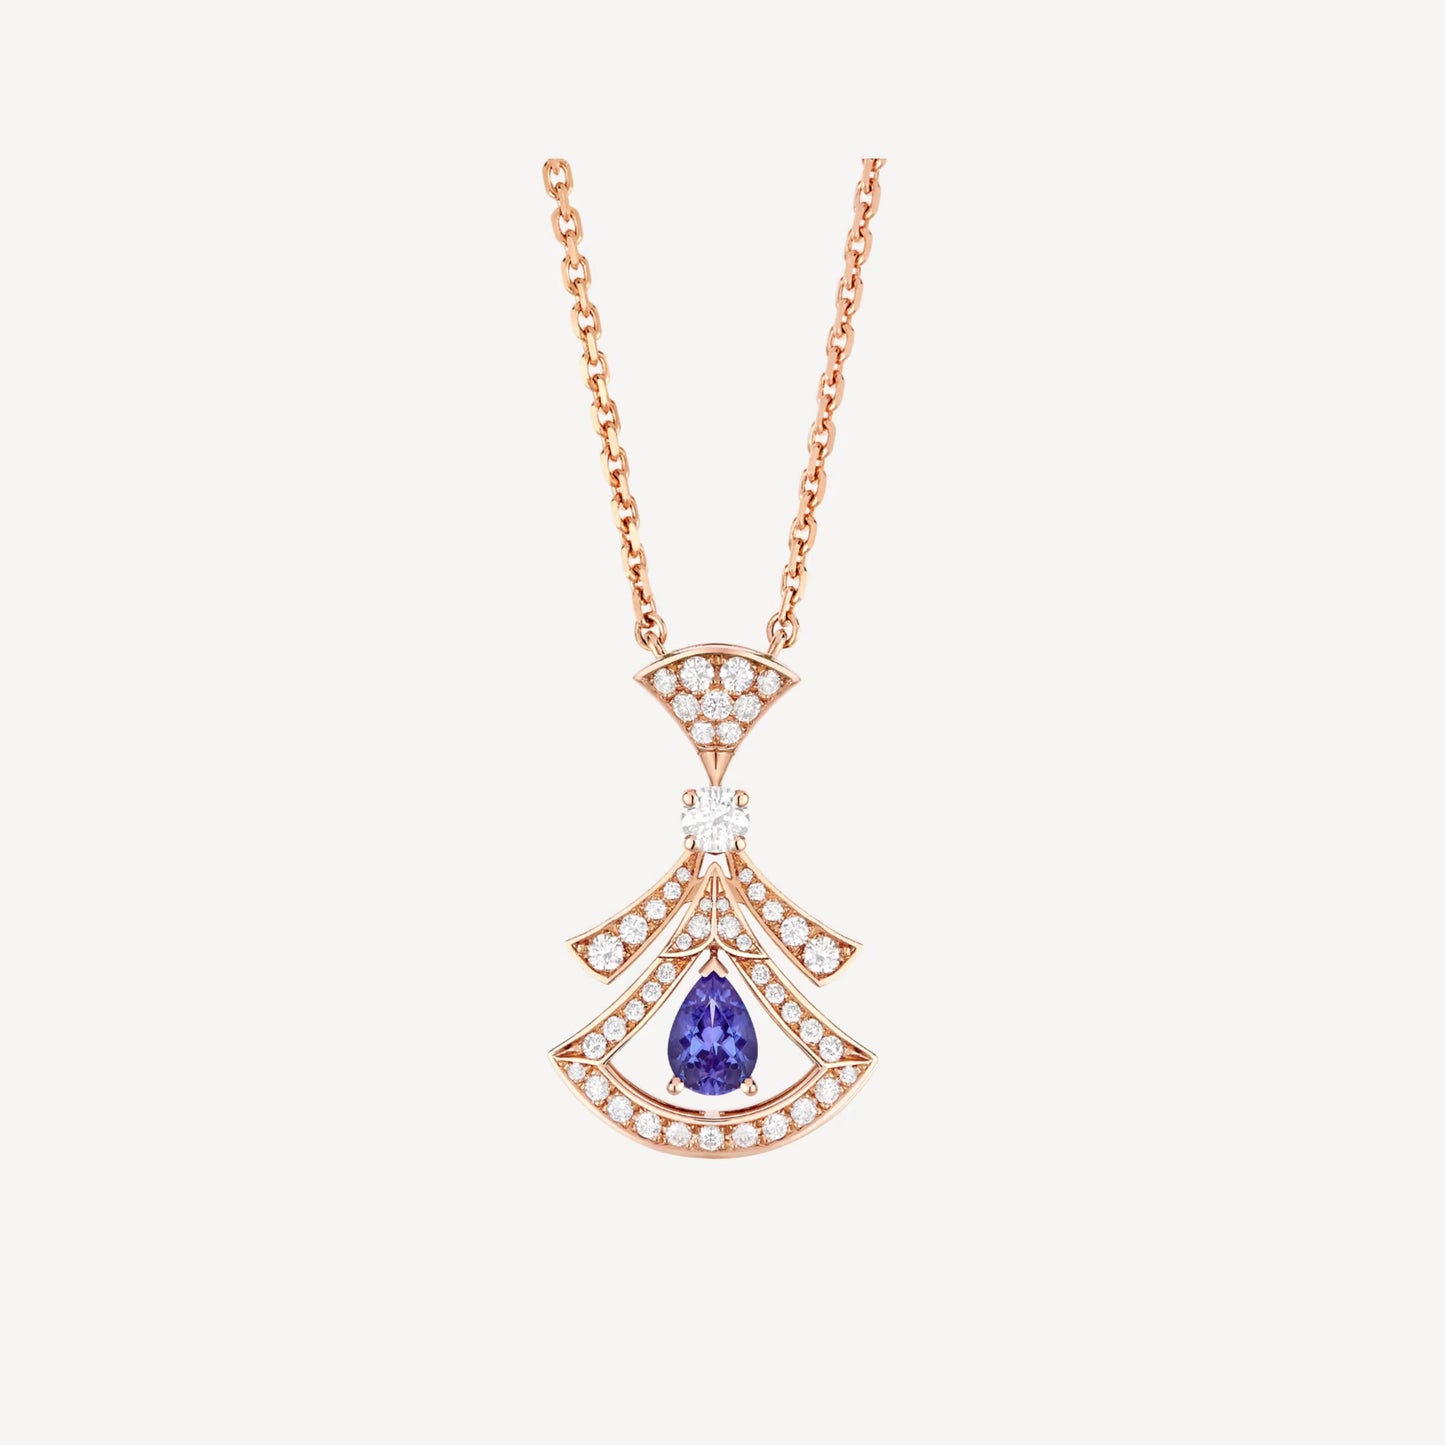 Bulgari Diva’s Dream Necklace “Rose Gold / Tanzanite / Diamonds”